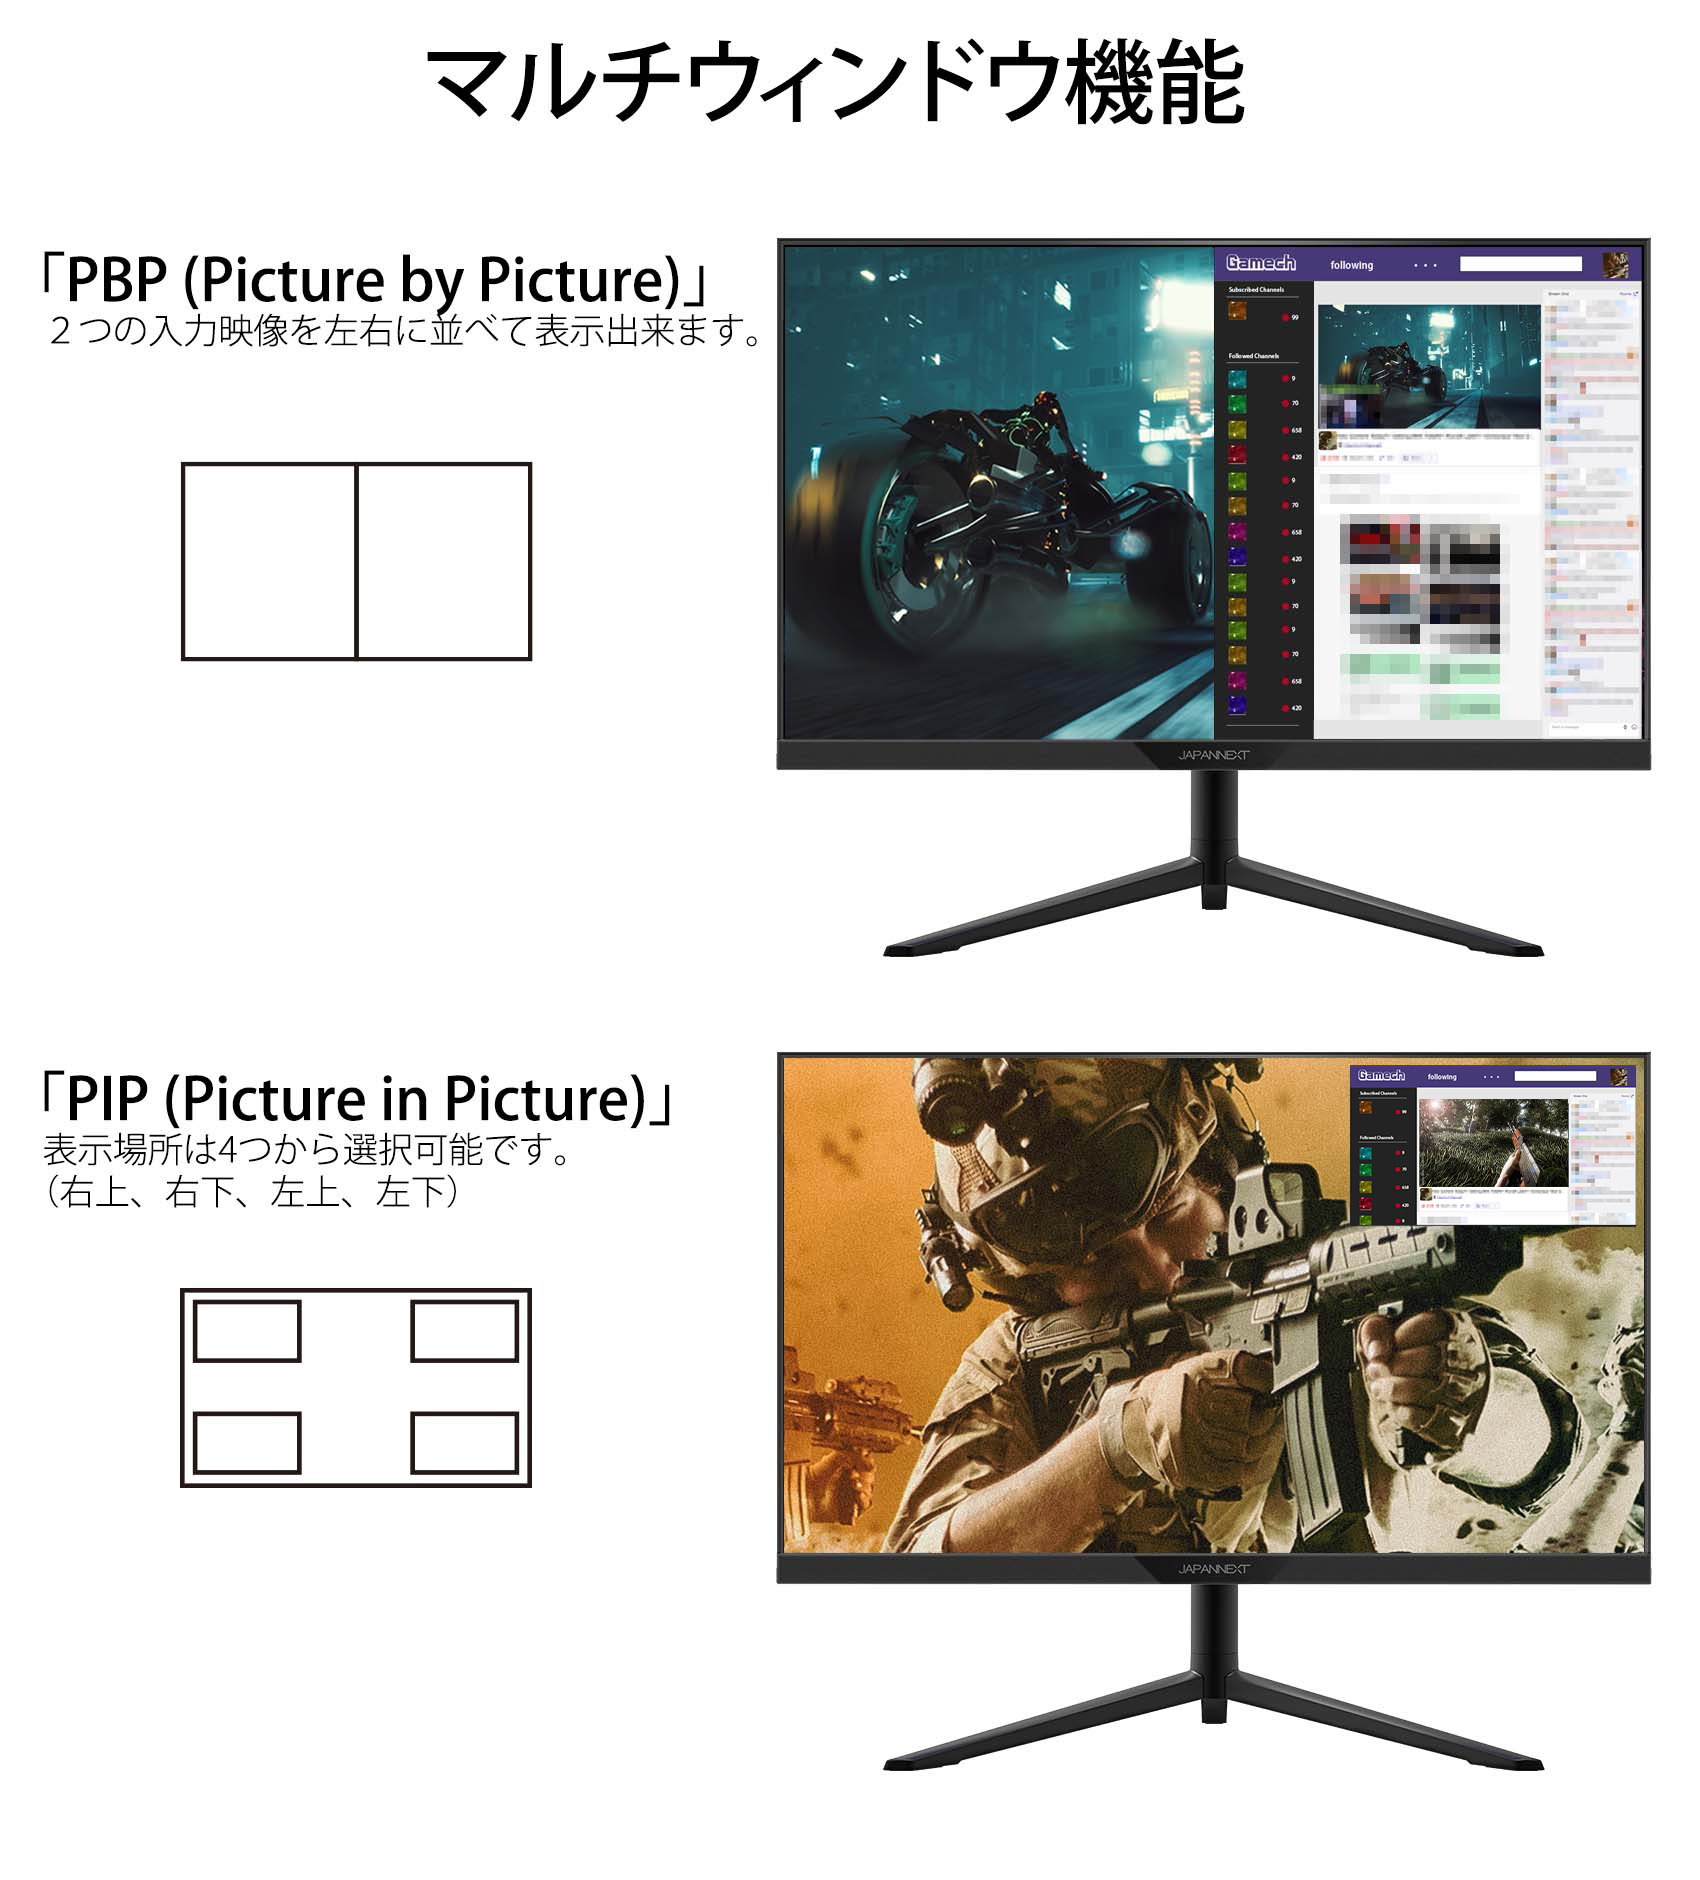 JAPANNEXT 「GX28」 <br>HDMI2.1対応28インチ4K(3840×2160)ゲーミングモニター<br>(HDMI,DP,144Hz,KVM機能,昇降スタンド,ピボット対応)  | 液晶ディスプレイ | | japannext